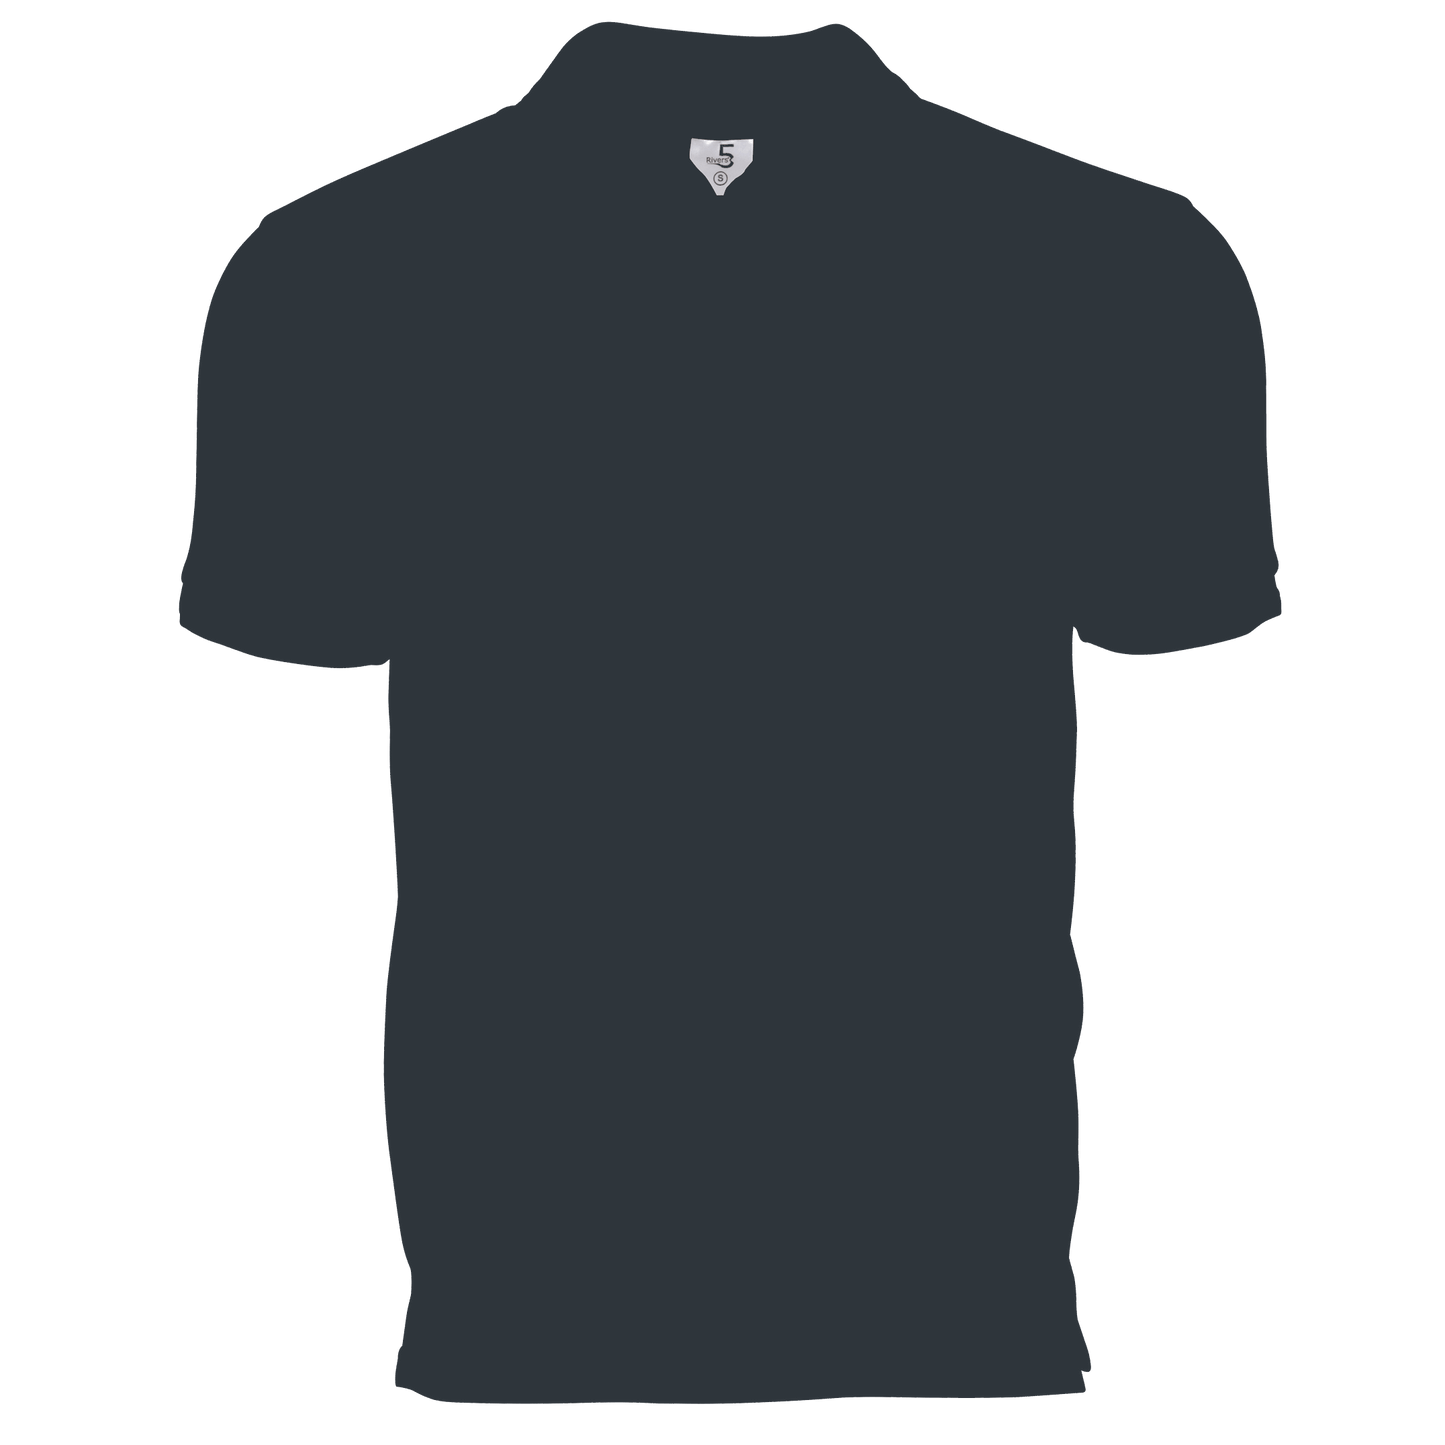 Pique Cotton Sport Shirt-3100